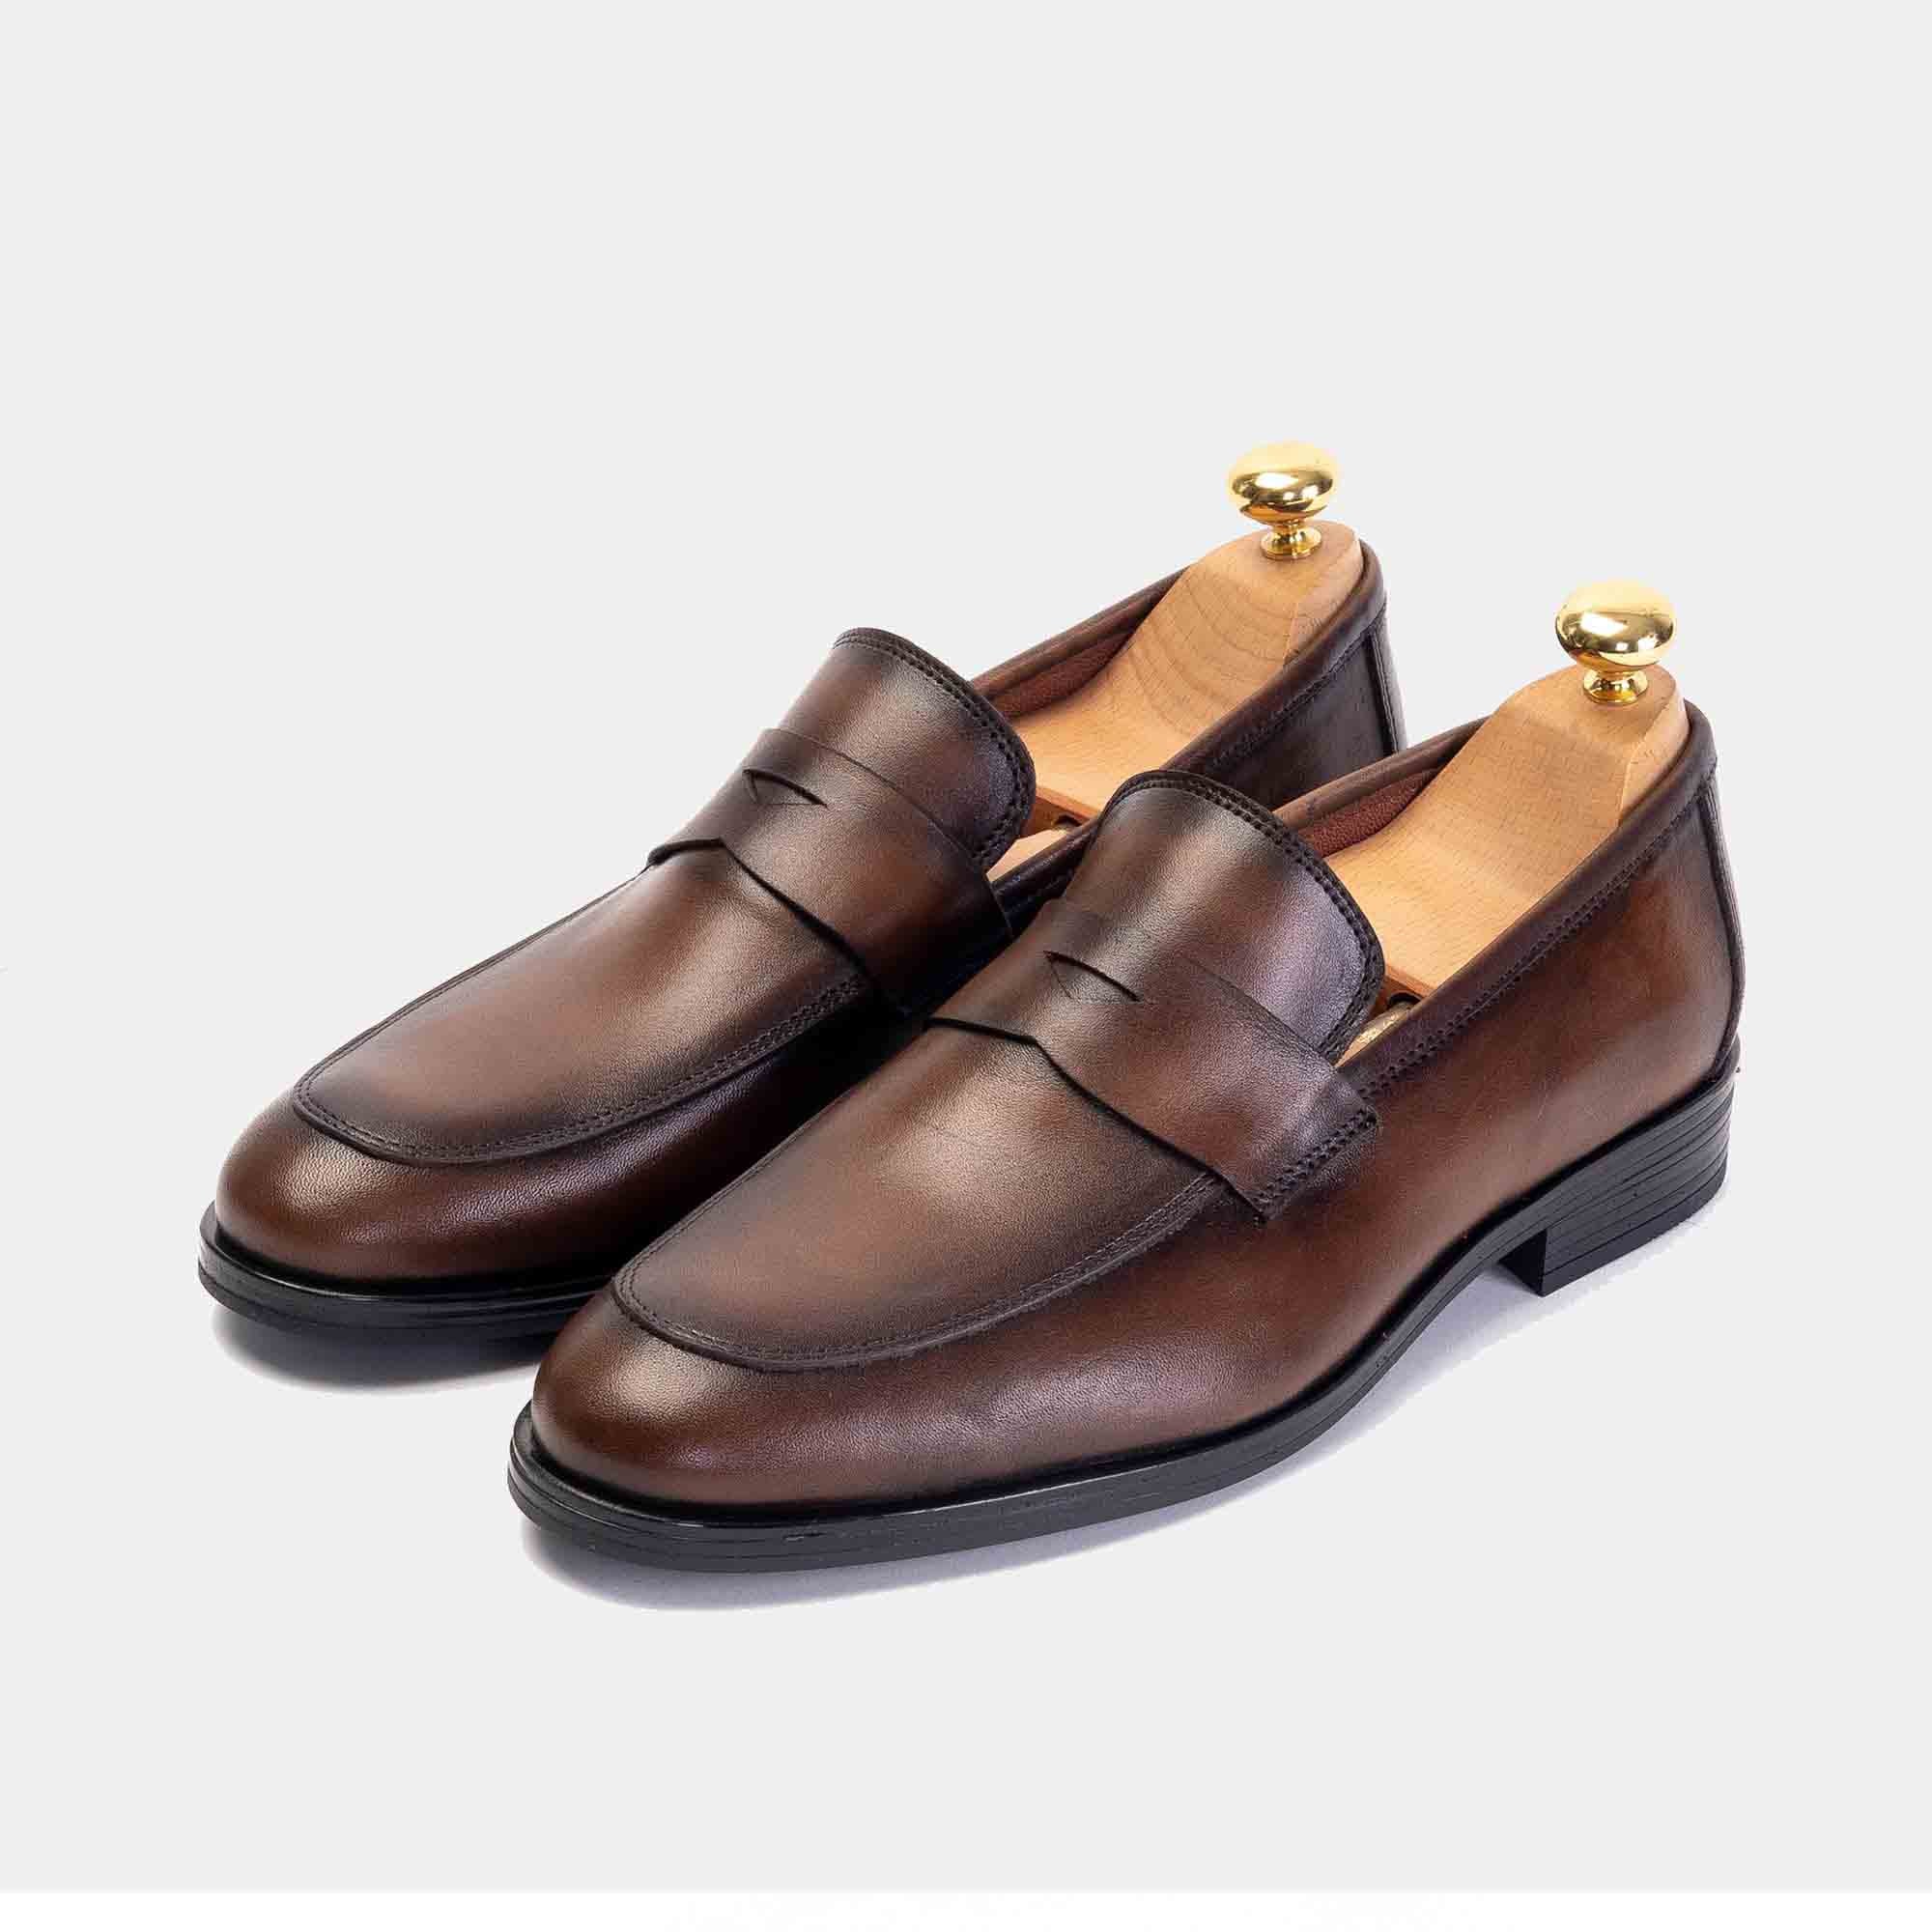 ''1120 S Chaussure en cuir Marron Vintage